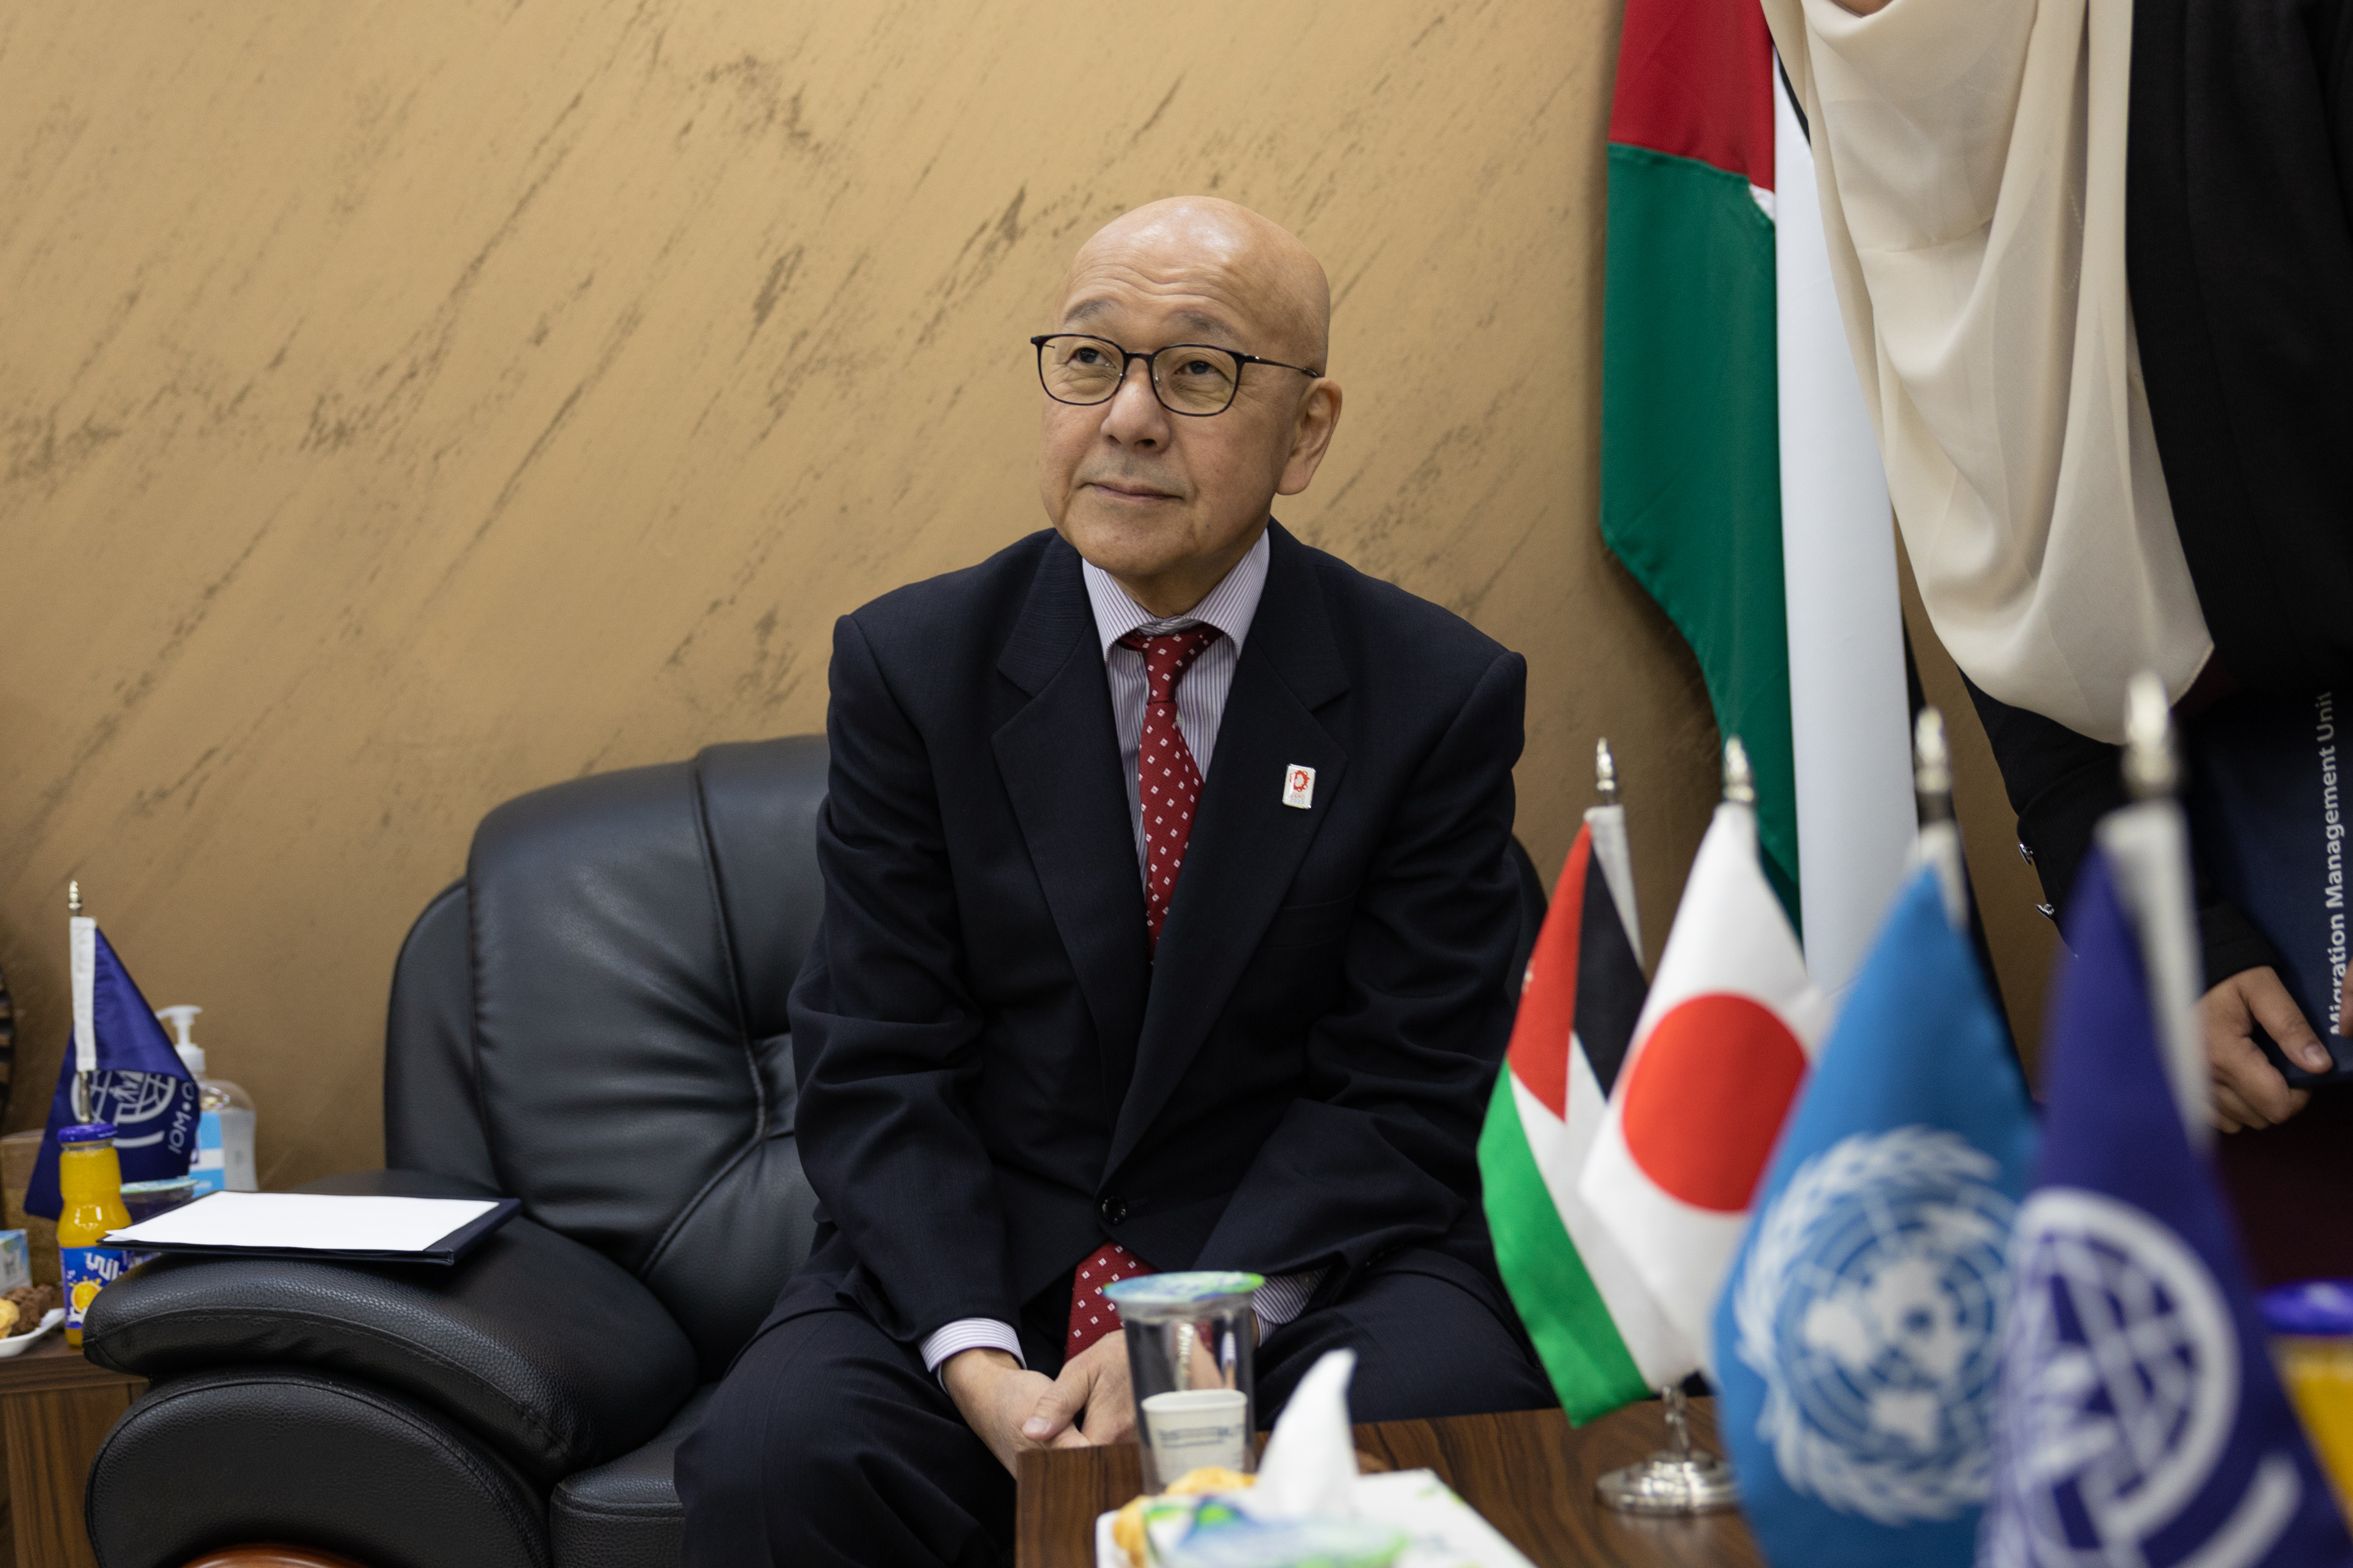 Opening remarks of the Ambassador of Japan to Jordan, Mr. Okuyama Jiro